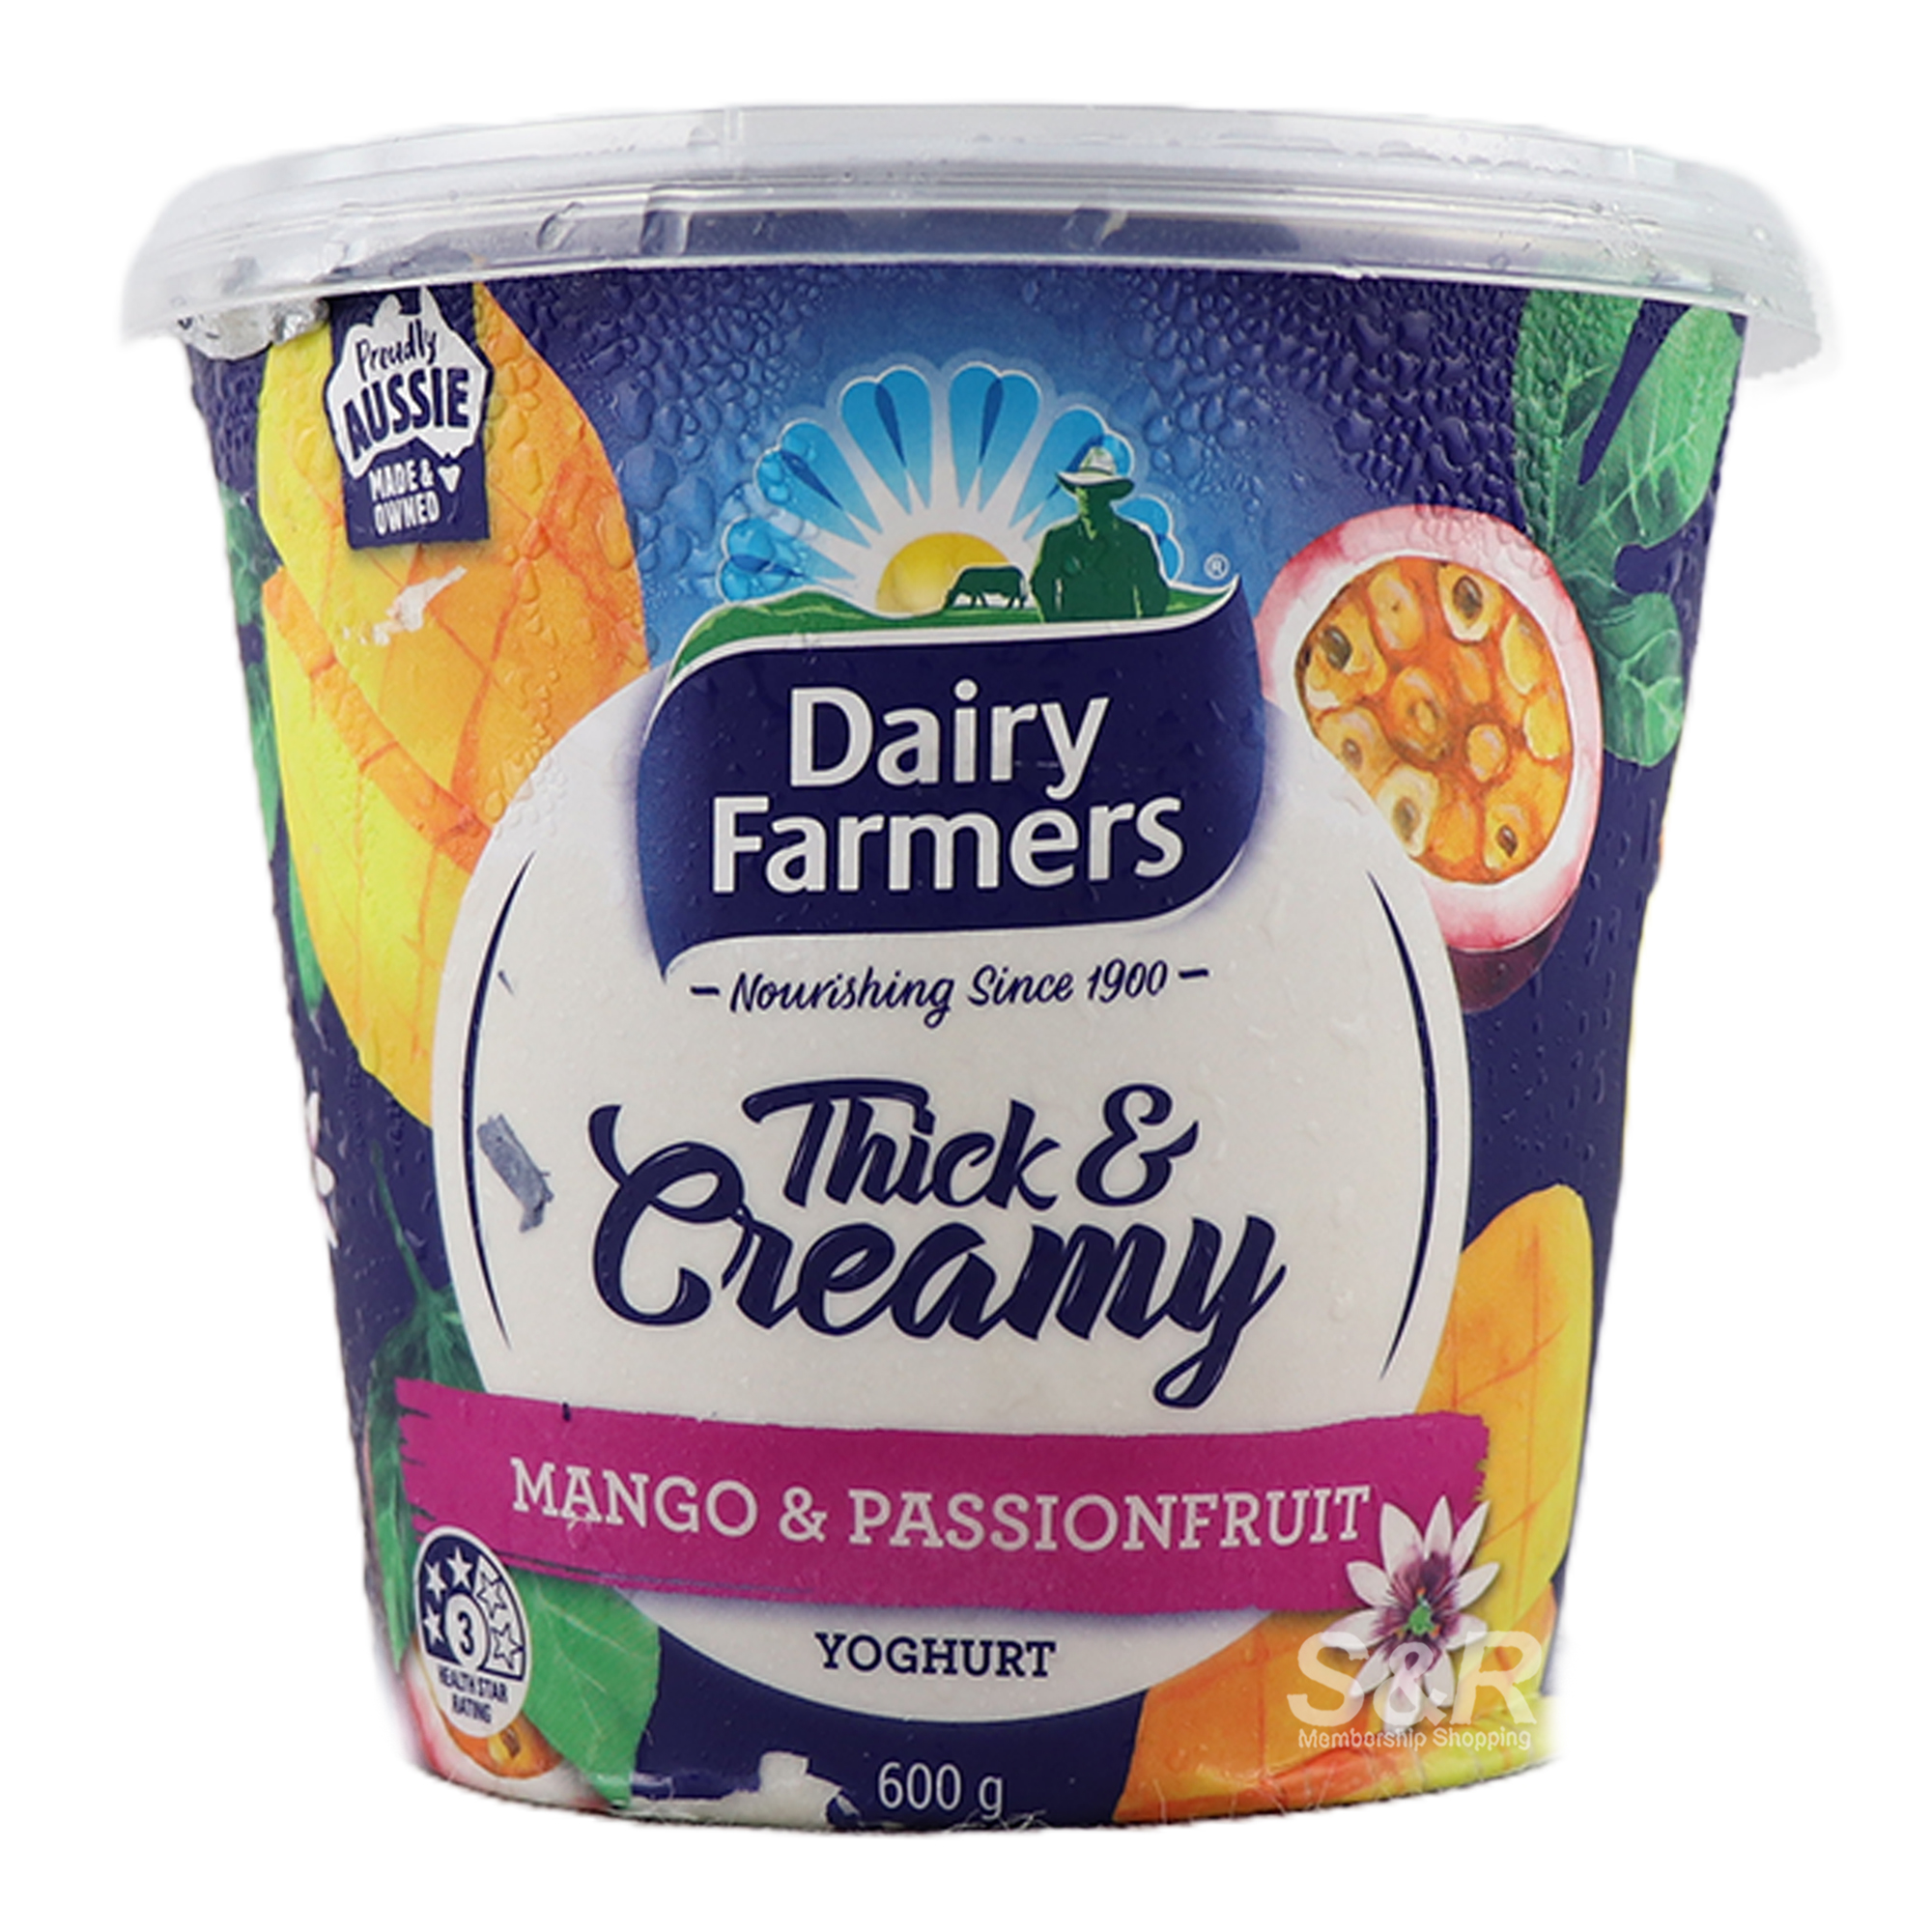 Dairy Farmers Thick & Creamy Mango & Passionfruit Yoghurt 600g